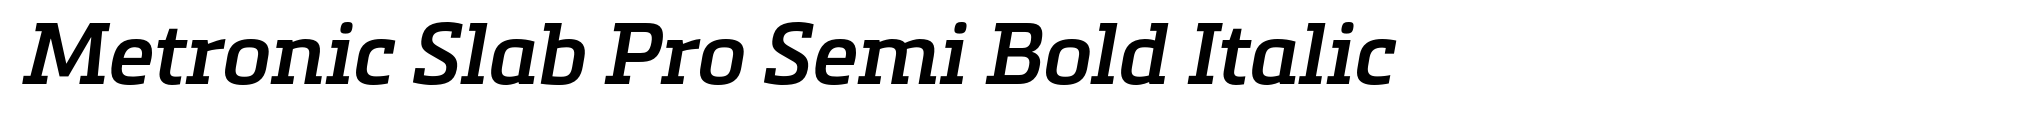 Metronic Slab Pro Semi Bold Italic image